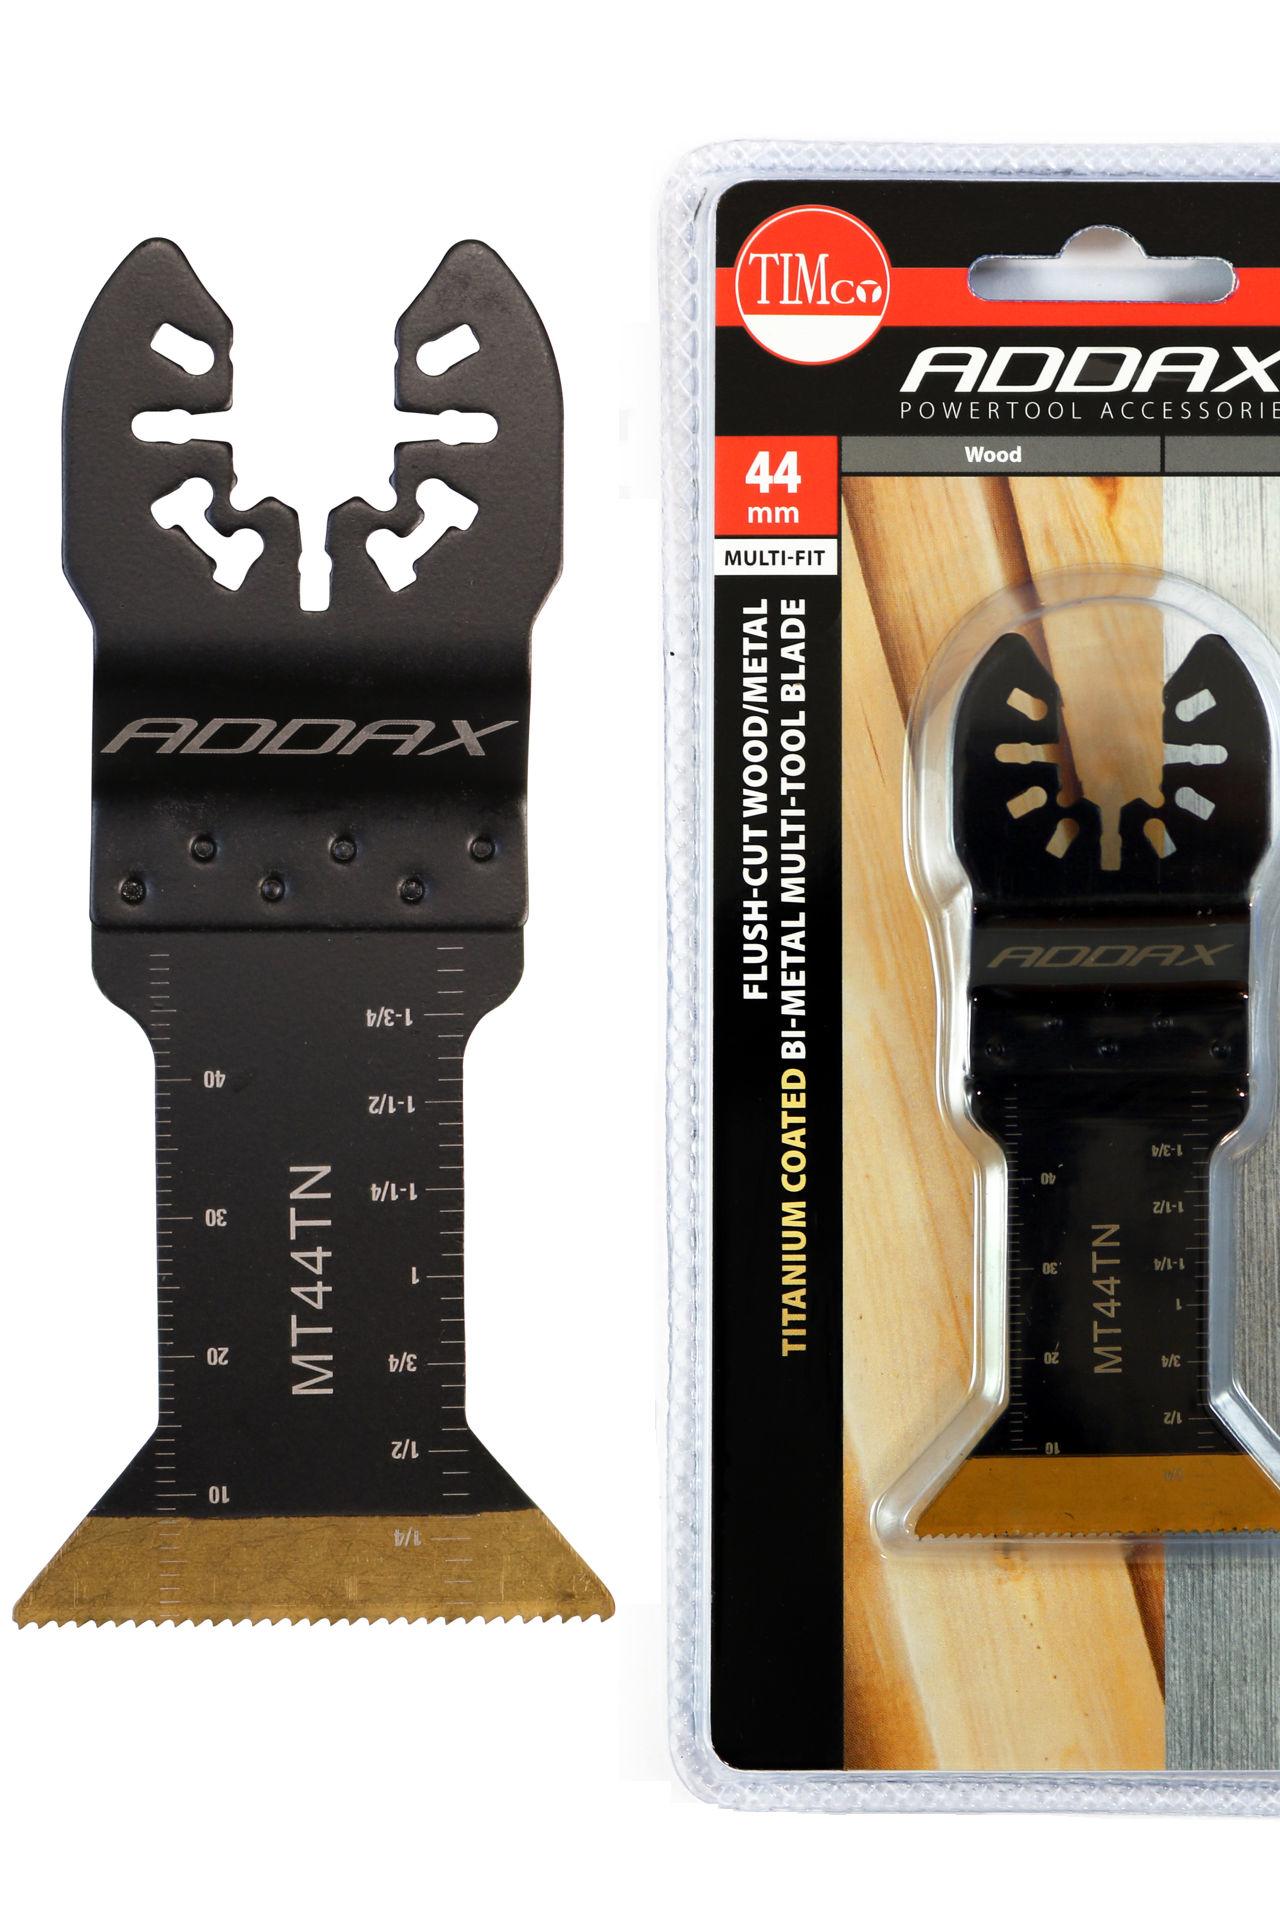 Addax 44mm Multi-Tool Fine Cut Blade - For Wood/Metal - Titanium Coated - Bi-Metal